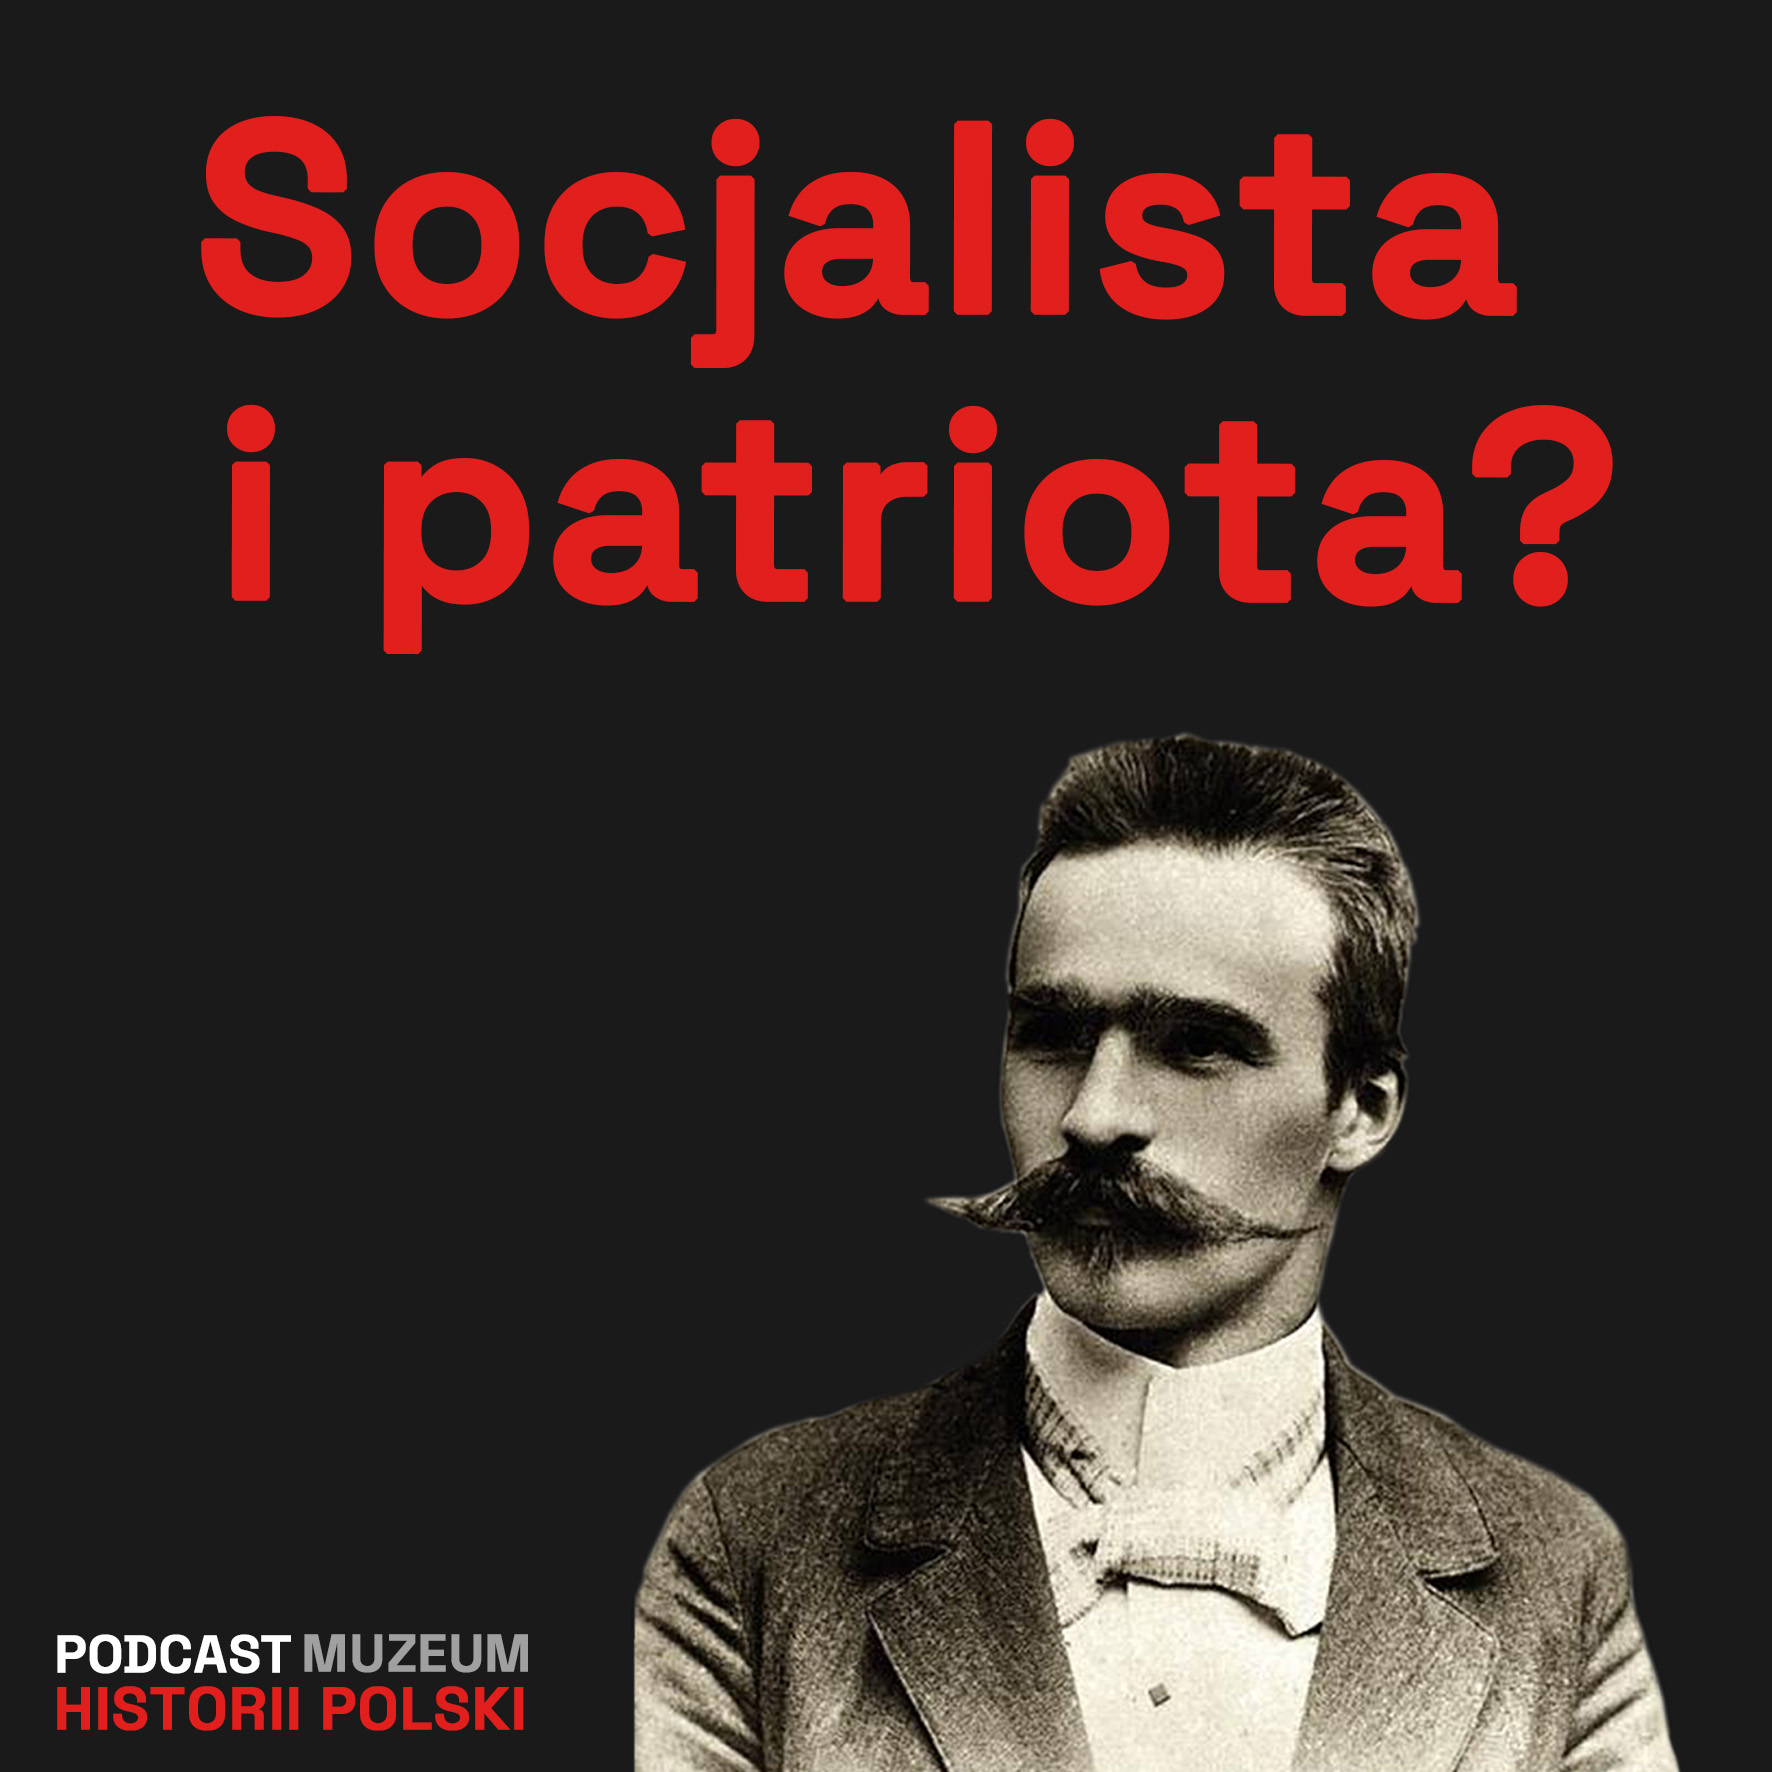 Józef Piłsudski. Patriota i socjalista?